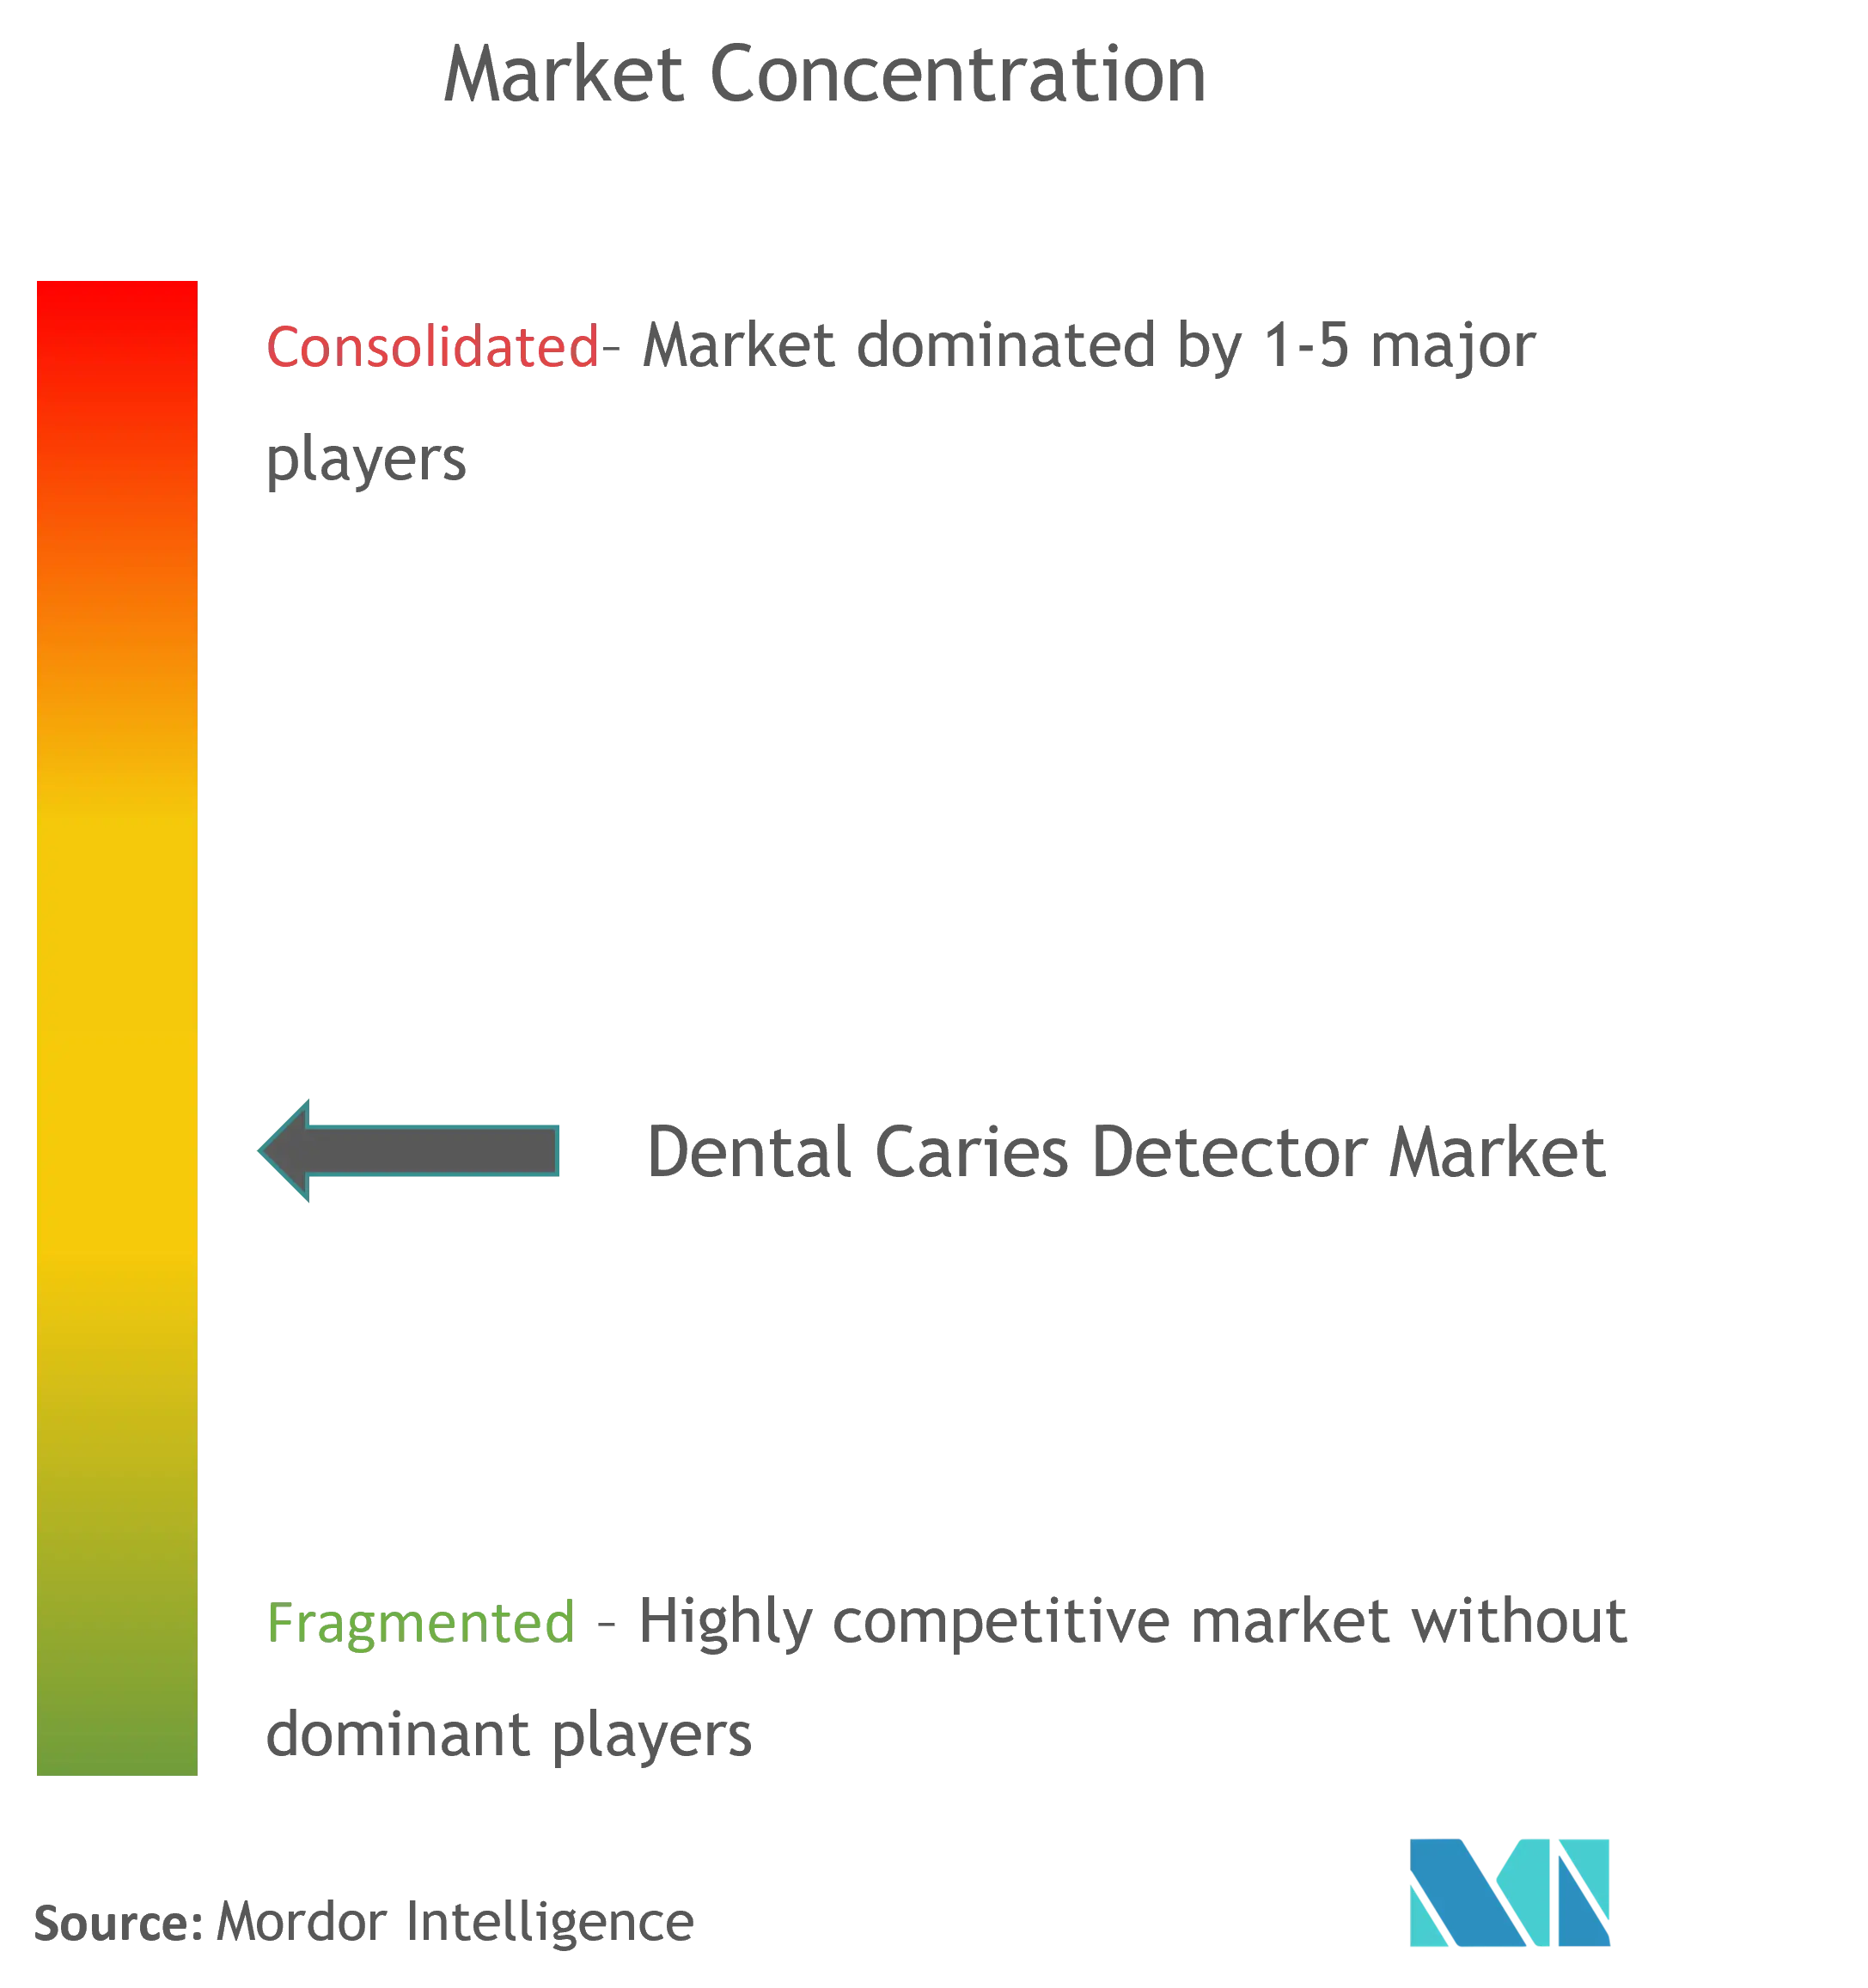 Dental Caries Detector Market Concentration